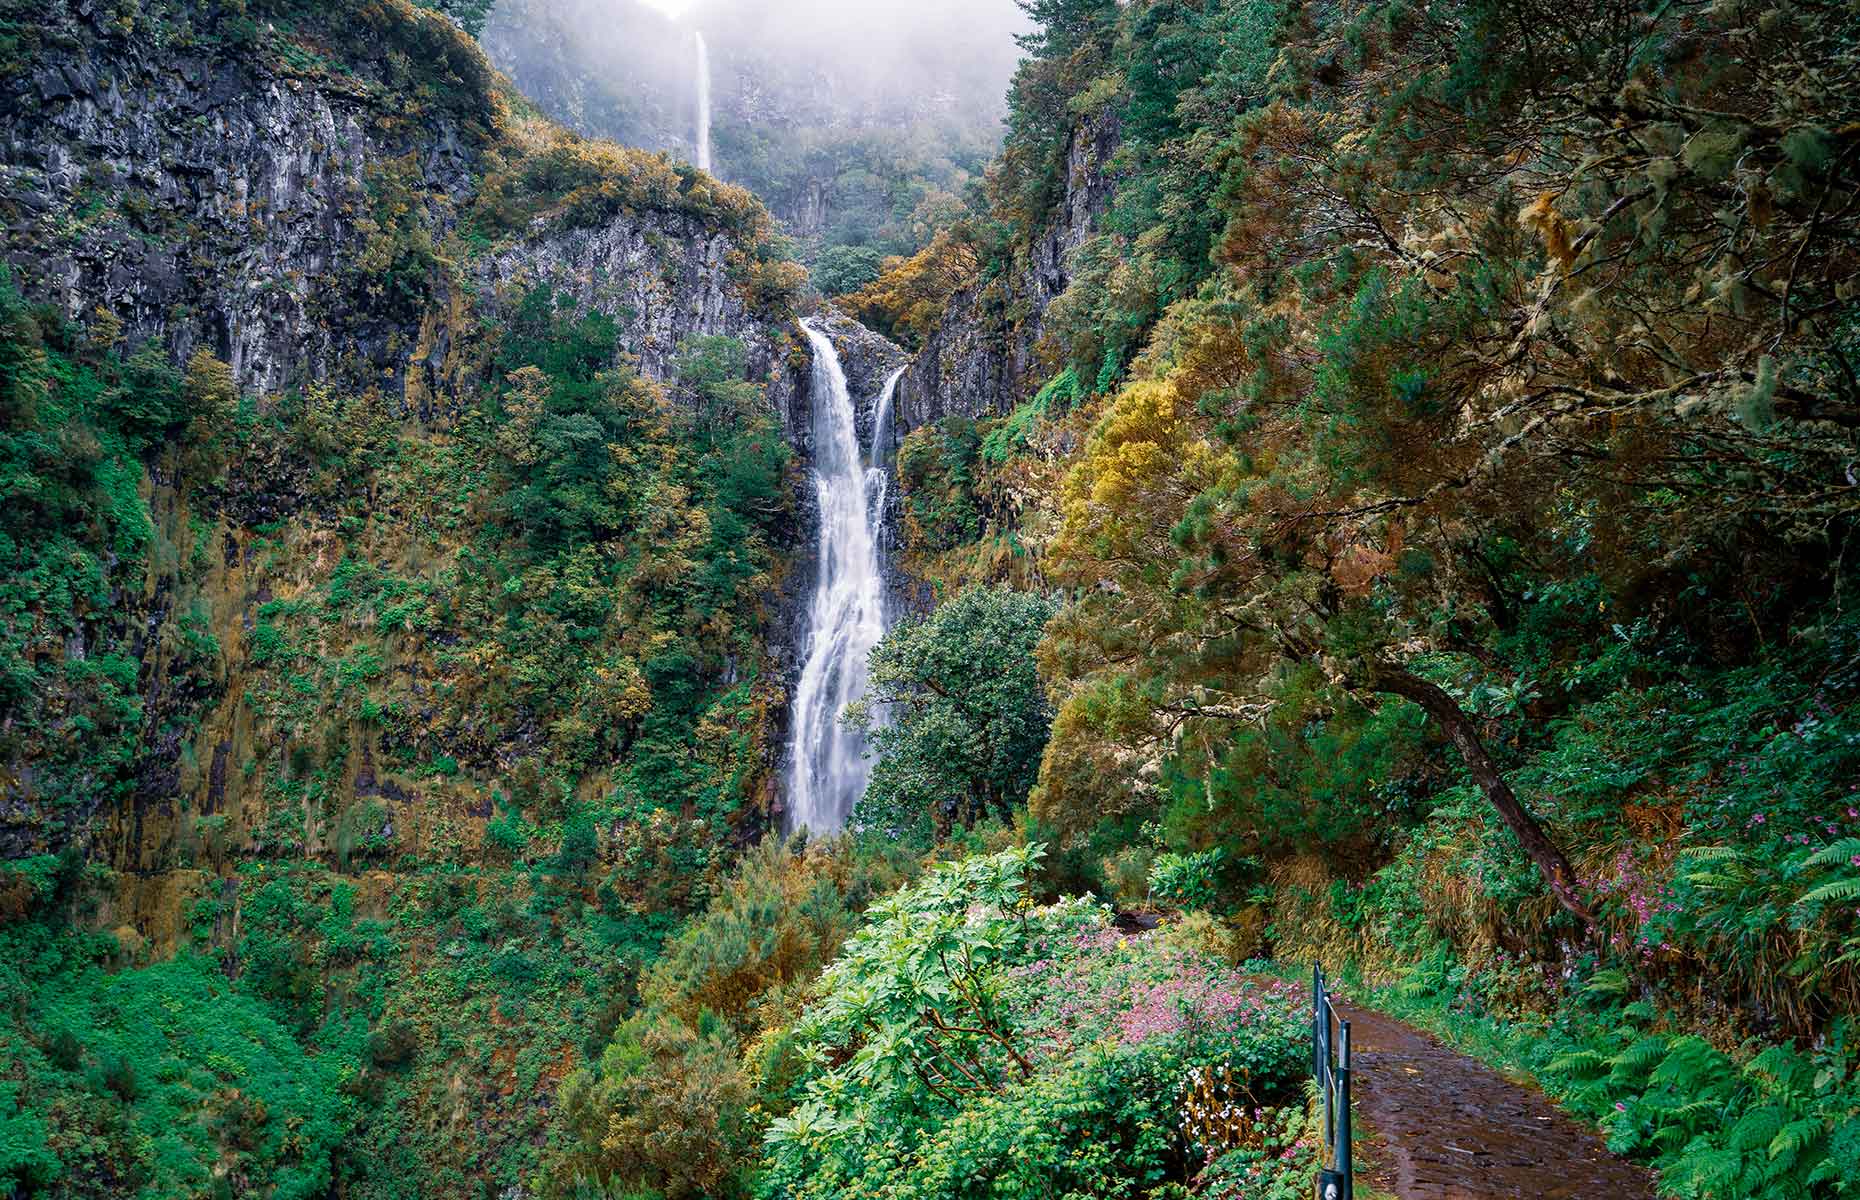 Risco waterfall (Image: novama/Shutterstock)